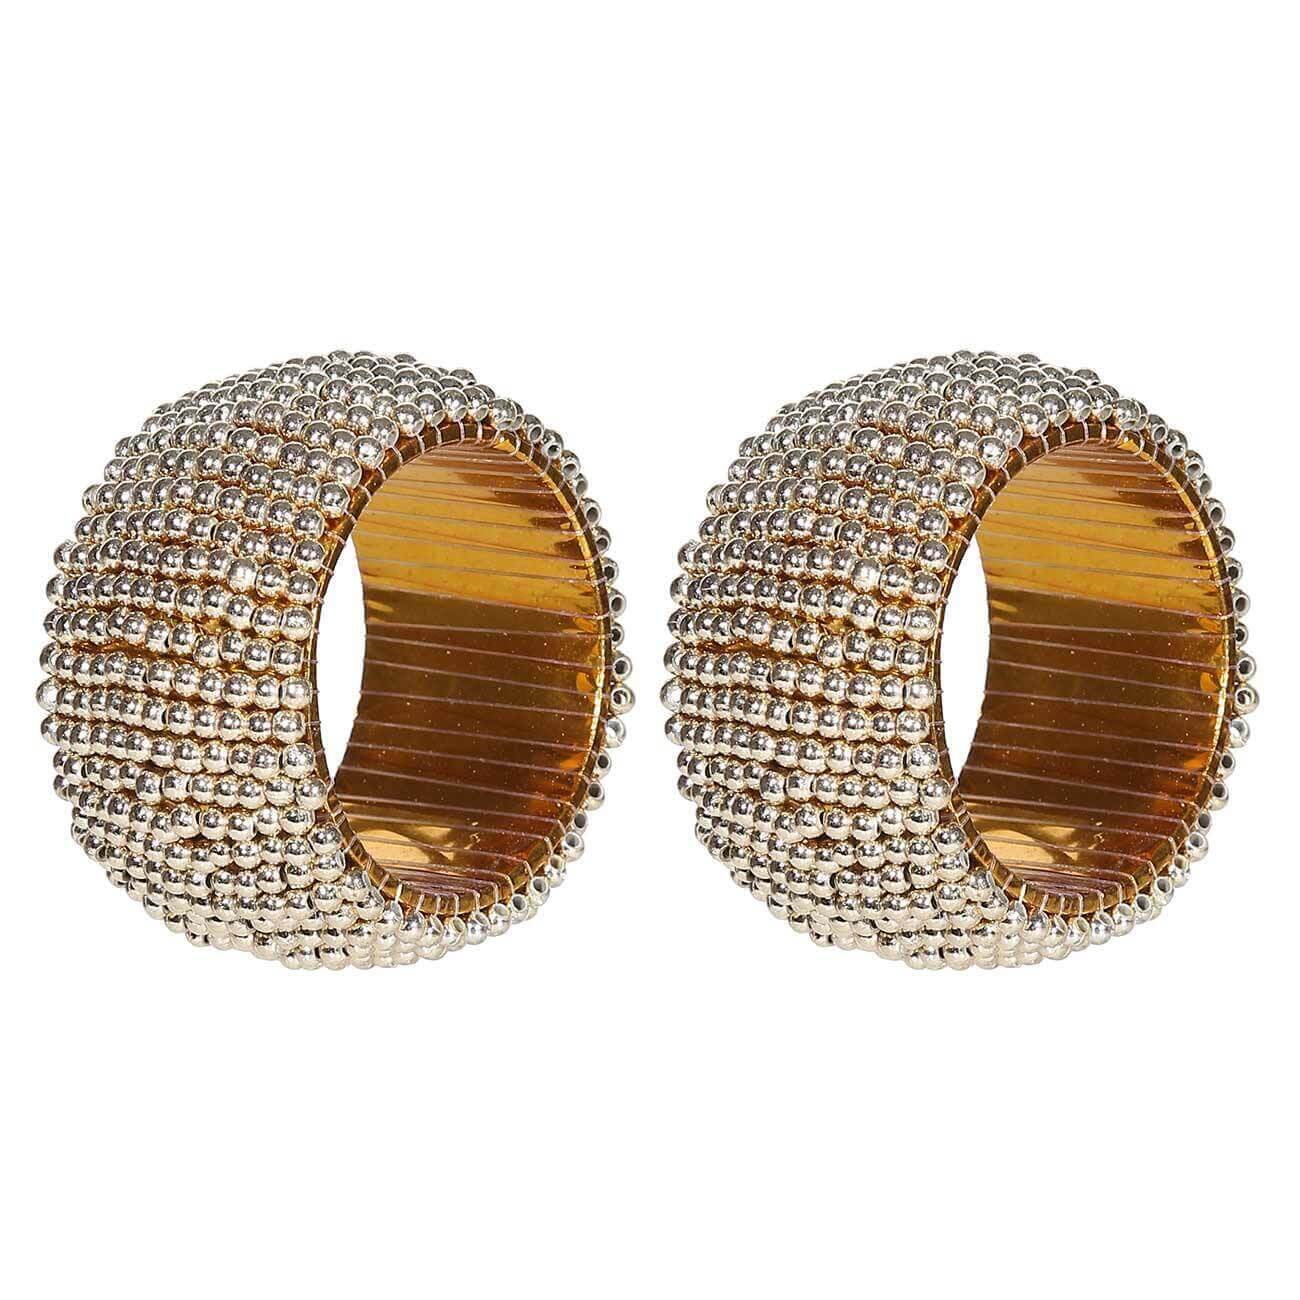 Кольцо для салфеток, 5 см, 2 шт, бисер, круглое, золотистое, Shiny beads бисер чехия preciosa 10 0 5 гр 90090